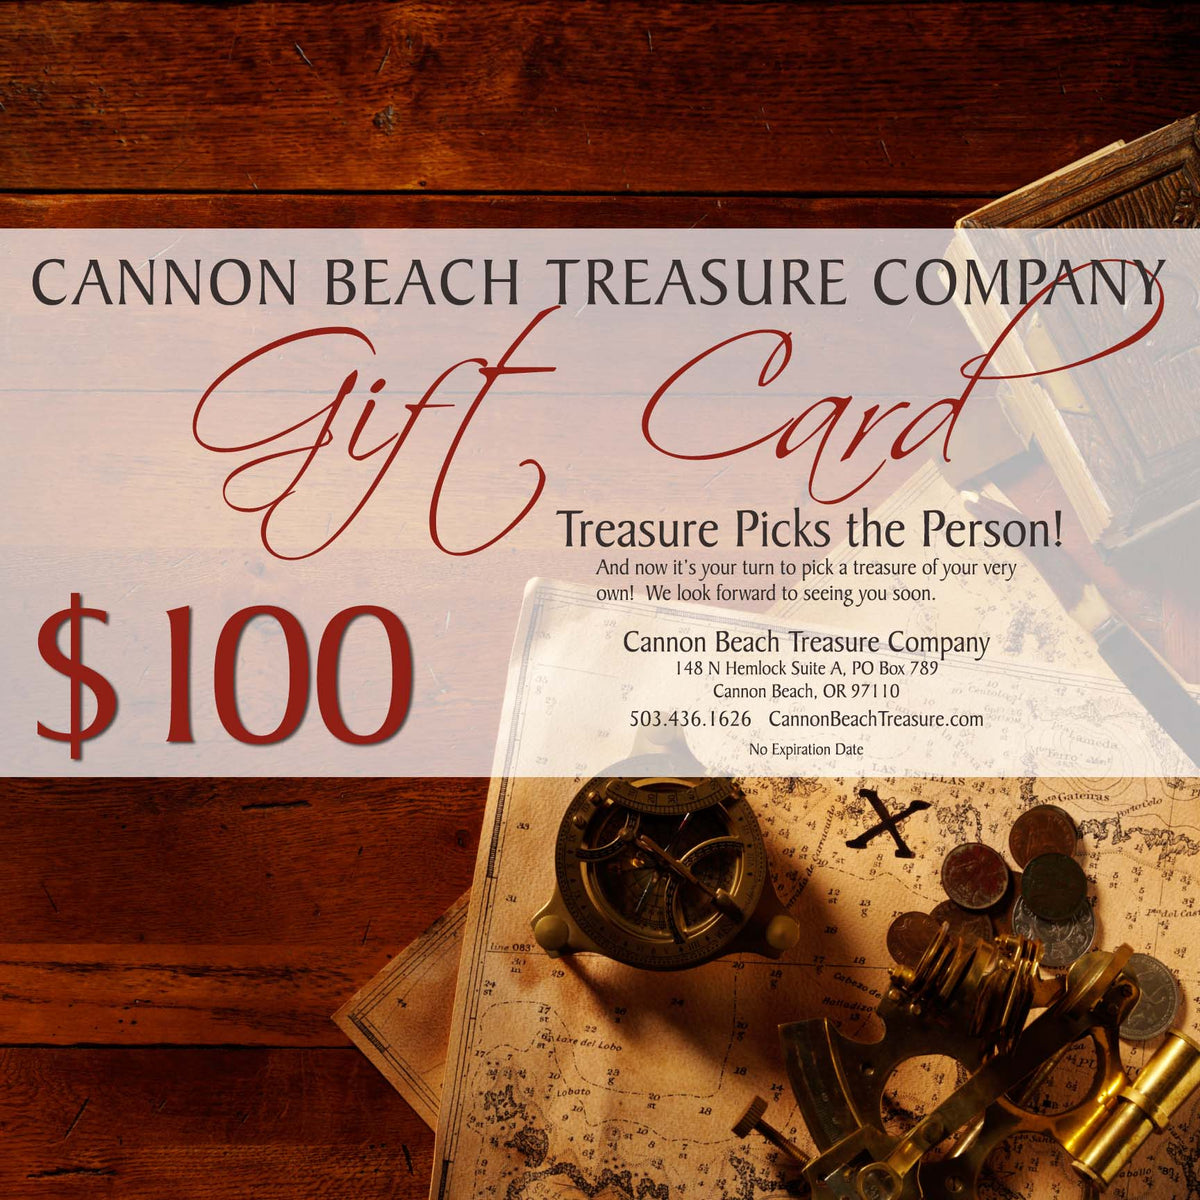 Cannon Beach Treasure Company Gift Card $100